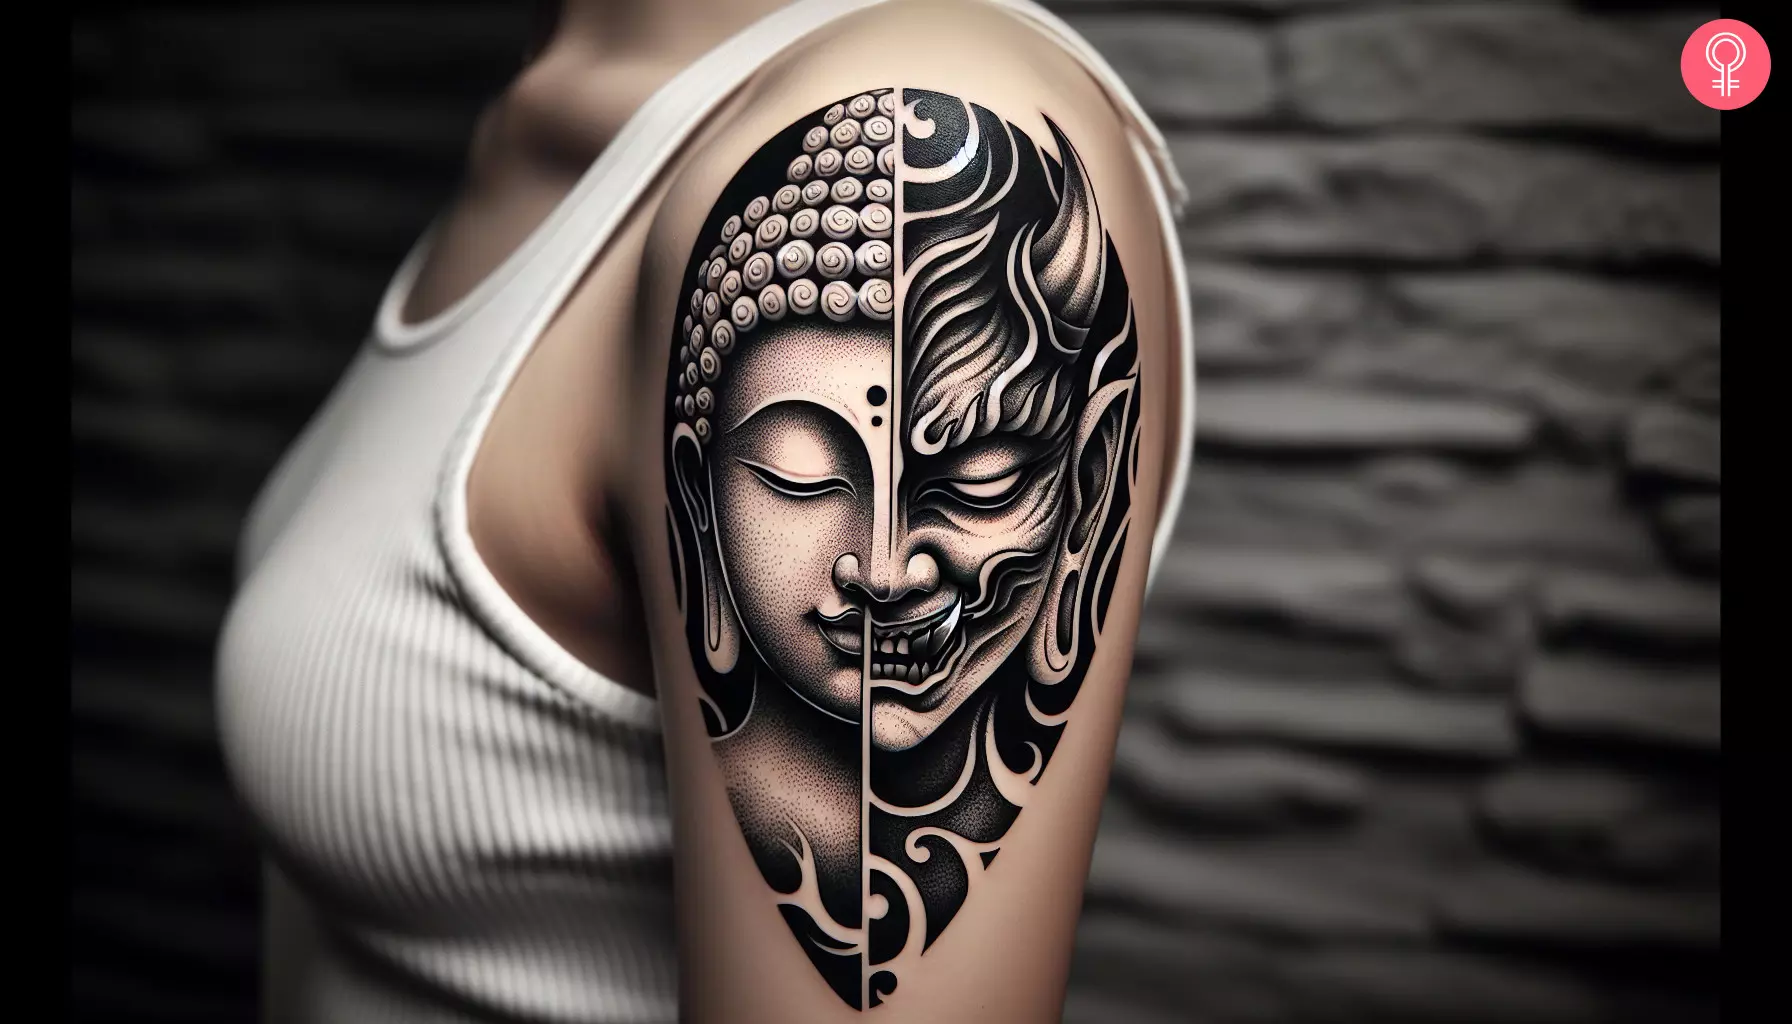 Half Buddha half demon tattoo on the arm